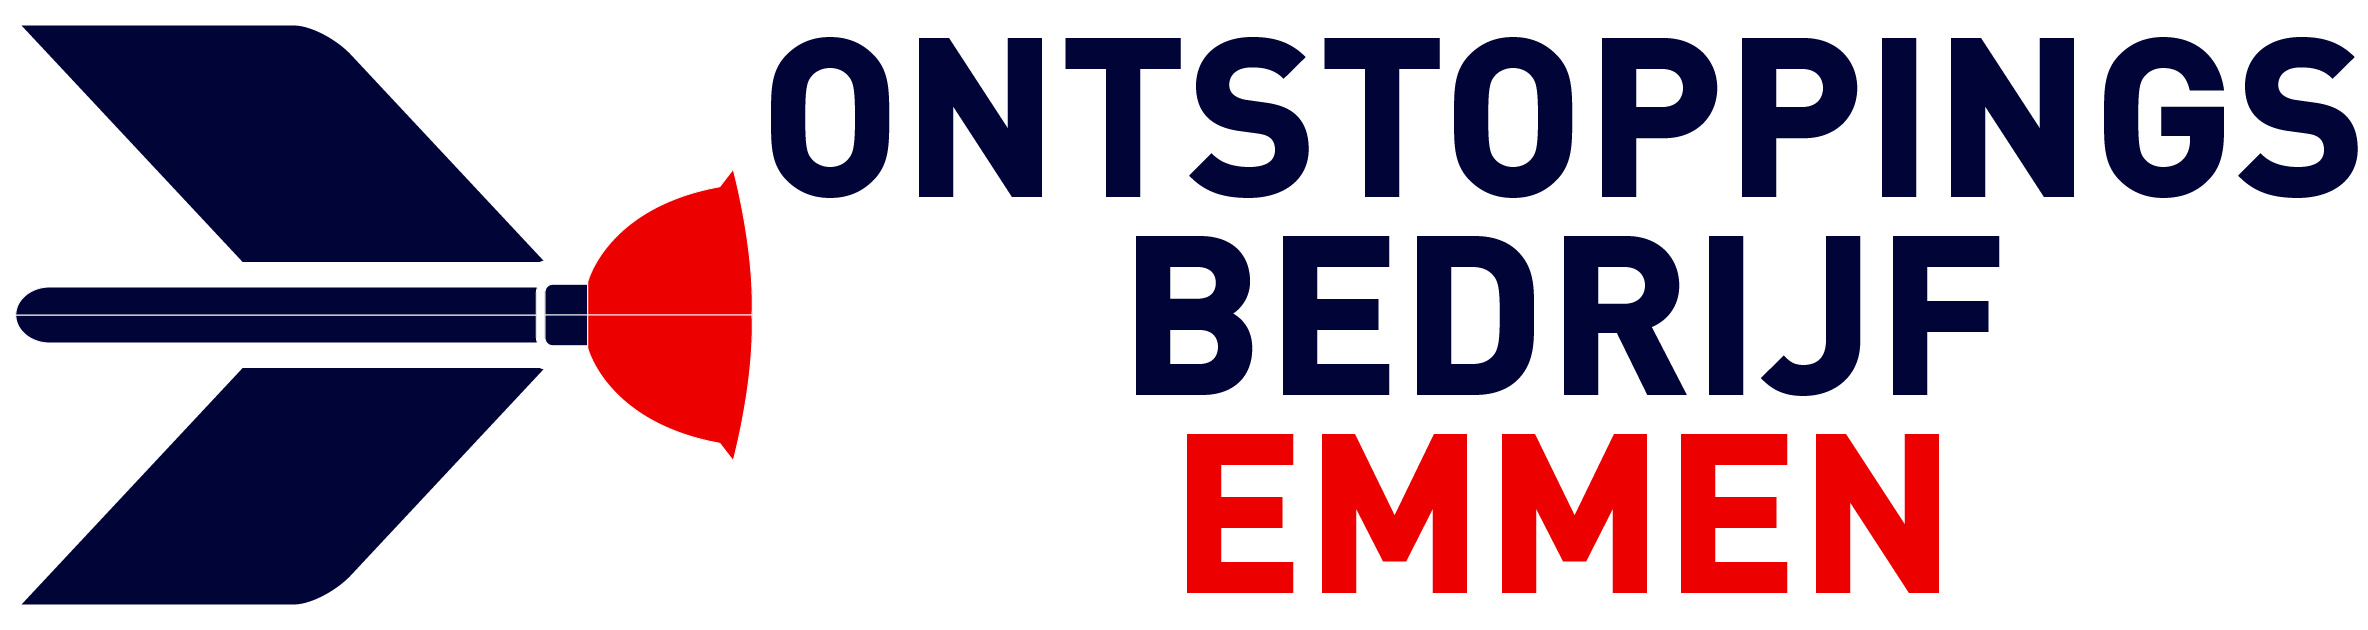 Ontstoppingsbedrijf Emmen logo